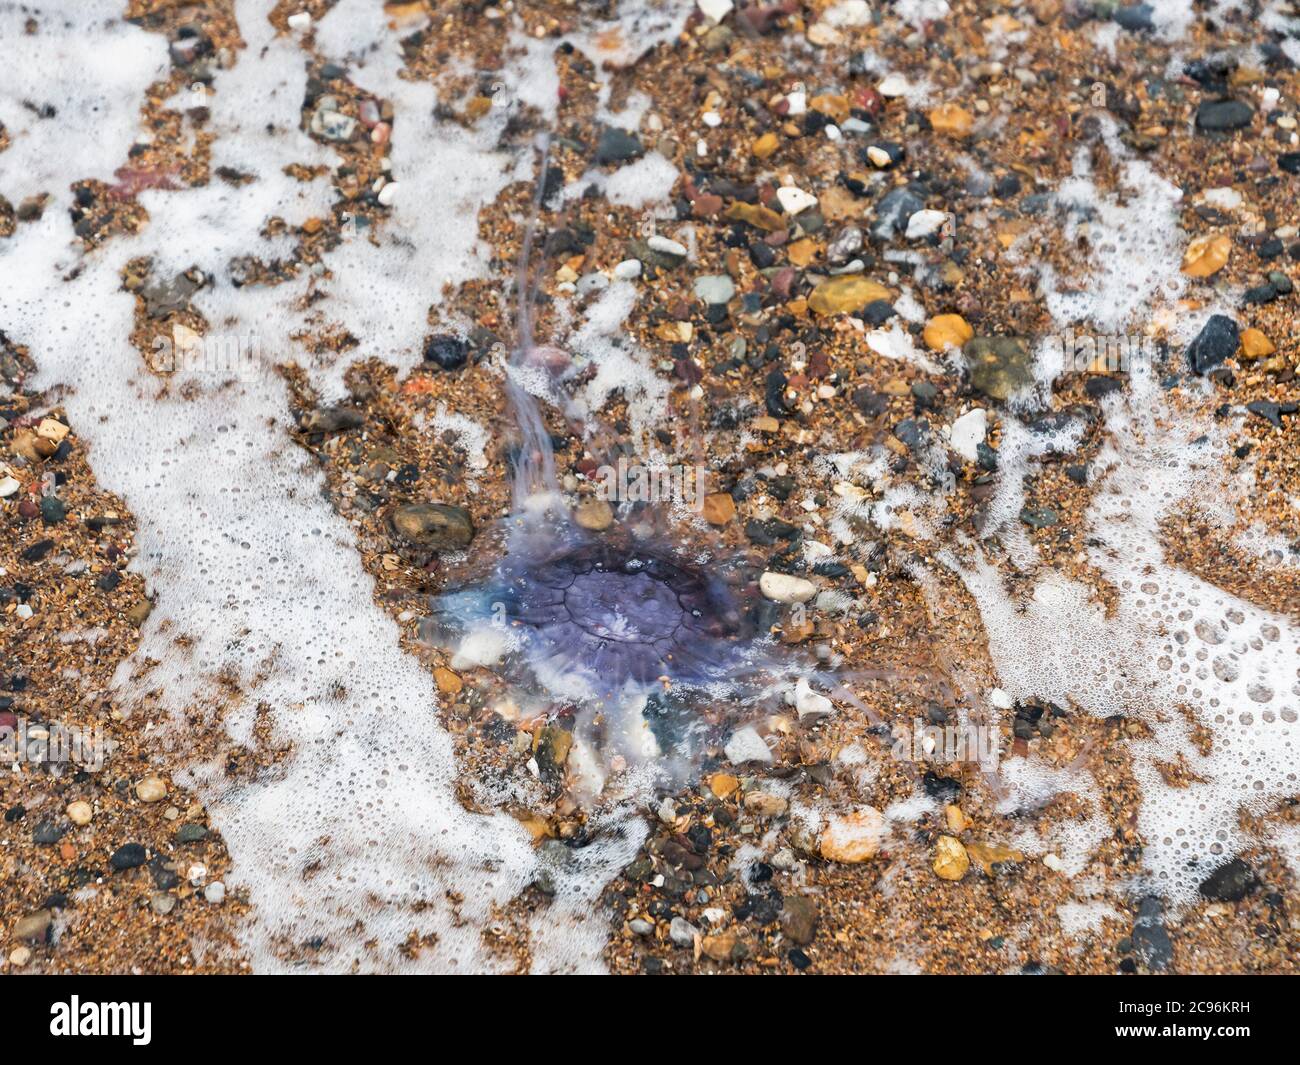 A blue jellffish, Cyanea lamarckii, washes up on a Northumberland beach, UK Stock Photo